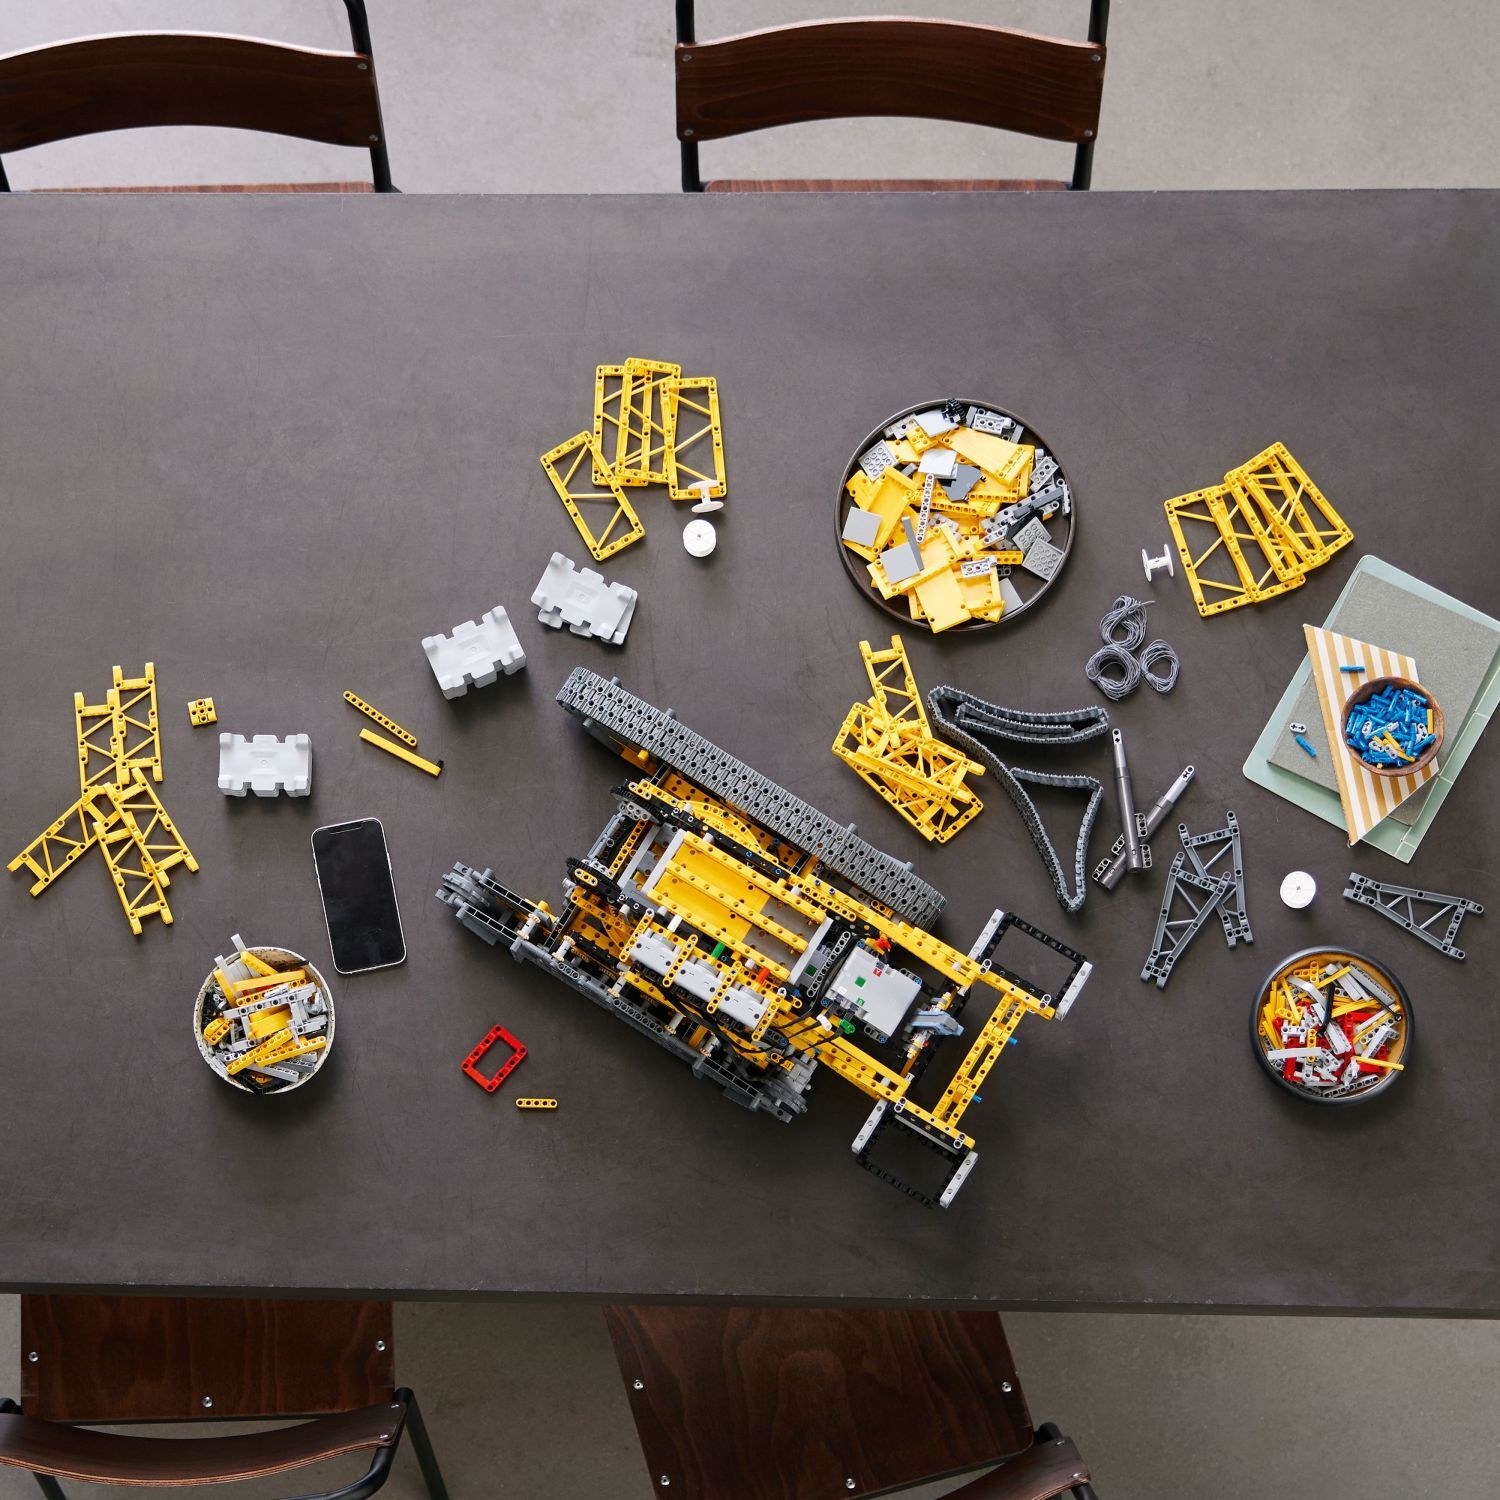 LEGO® Technic: Liebherr Crawler Crane LR 13000